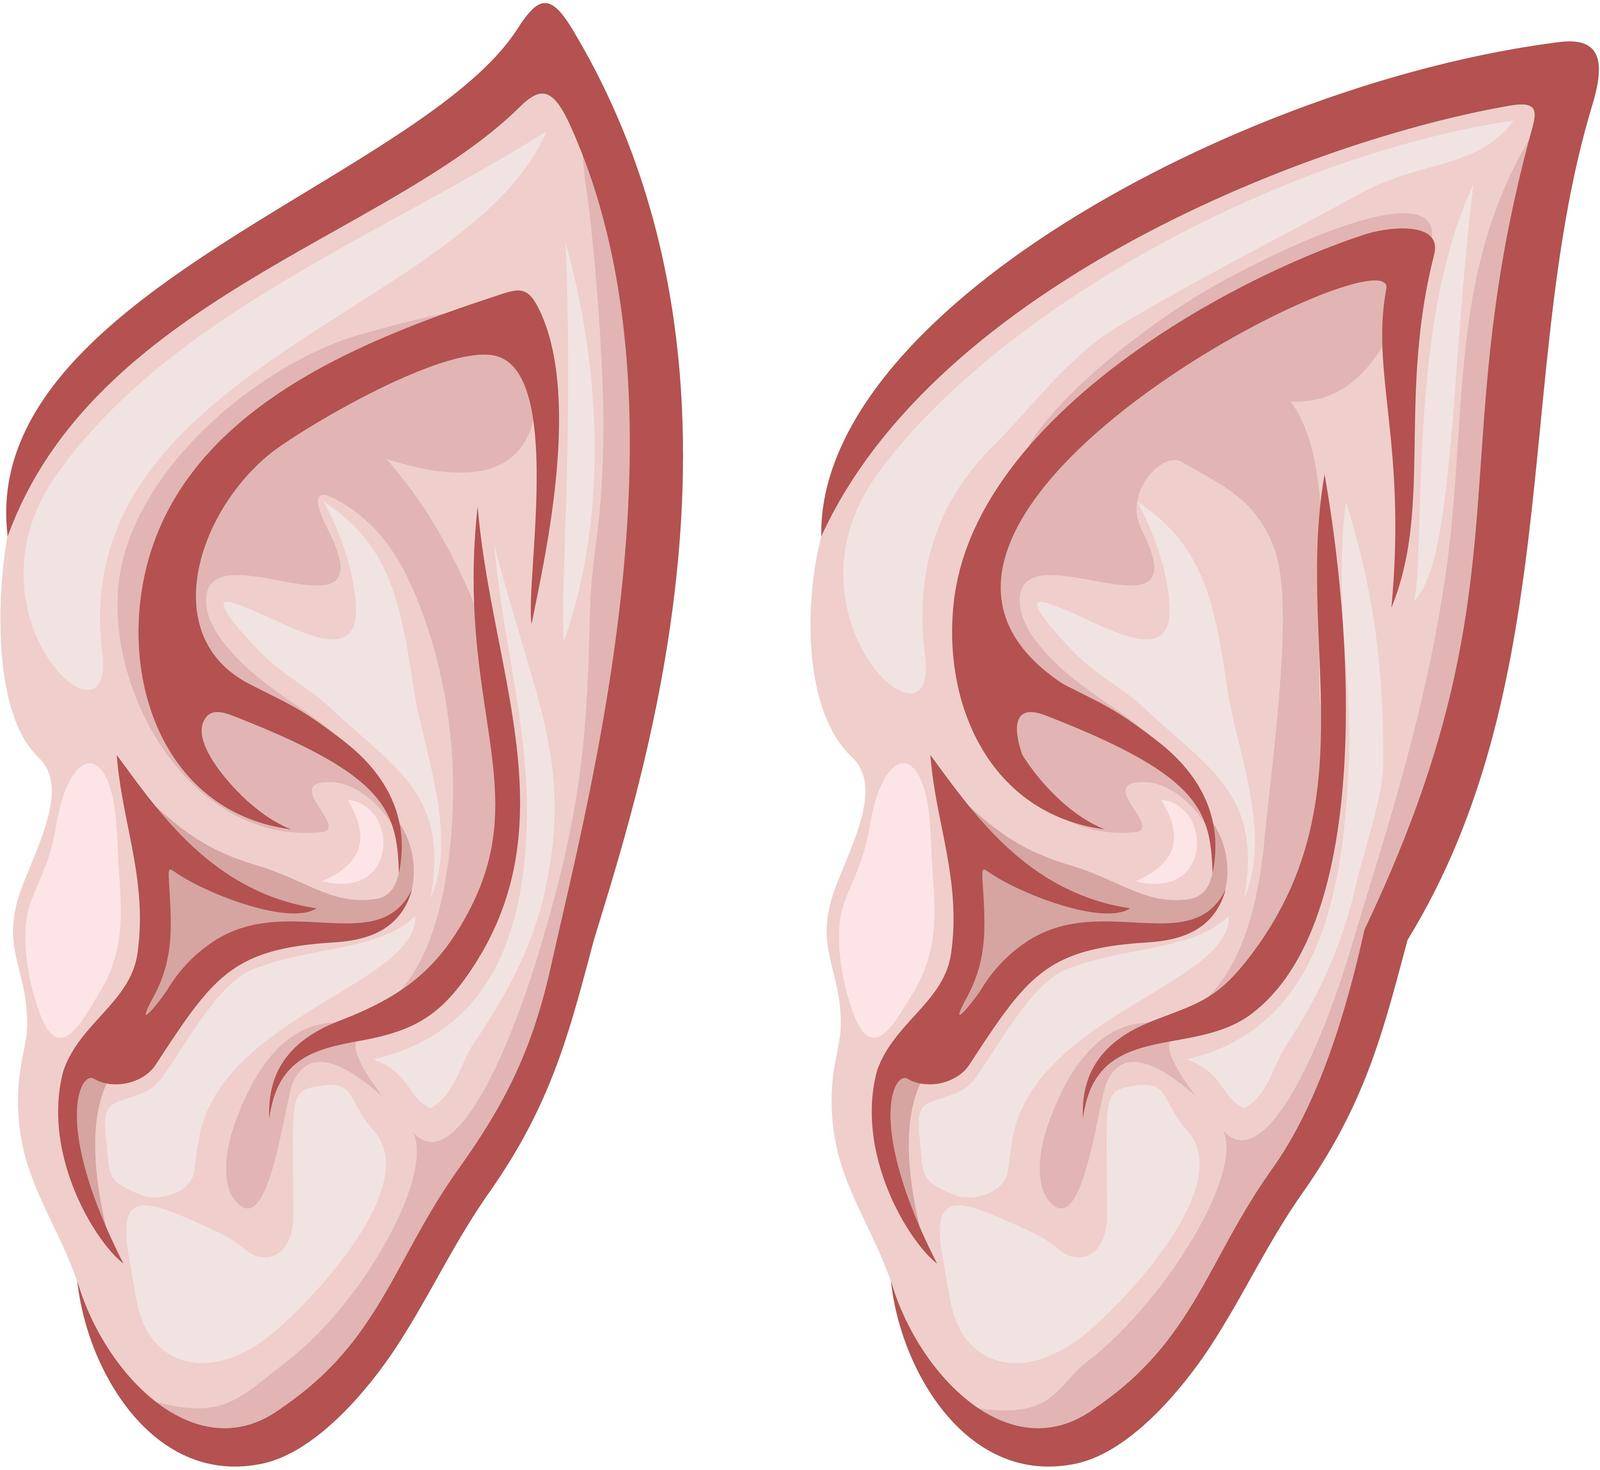 Elf ears vector illustration